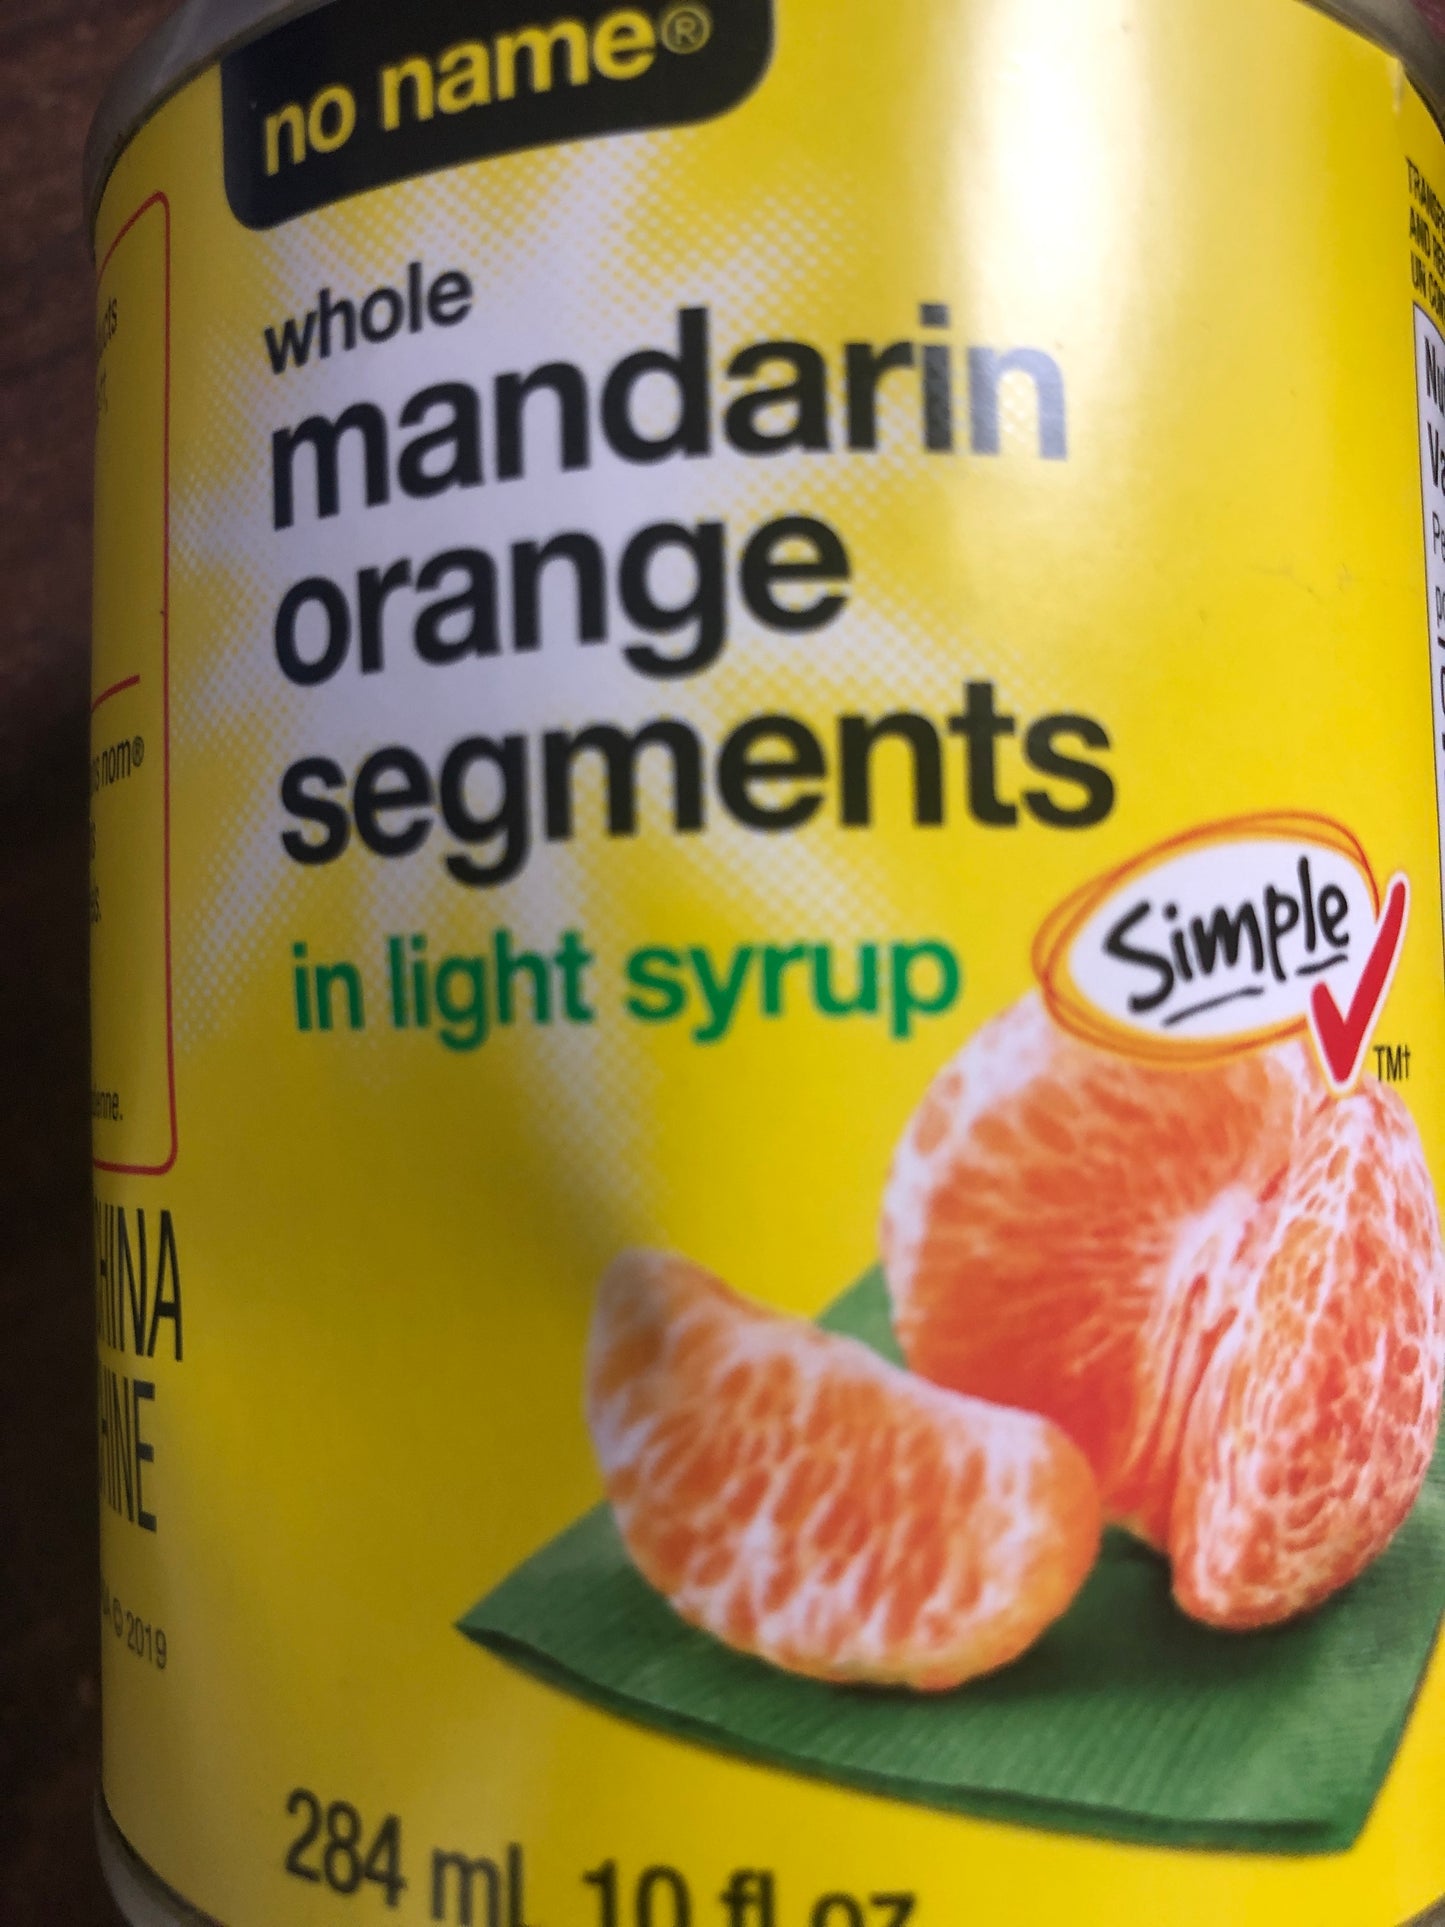 Canned mandarin orange segments